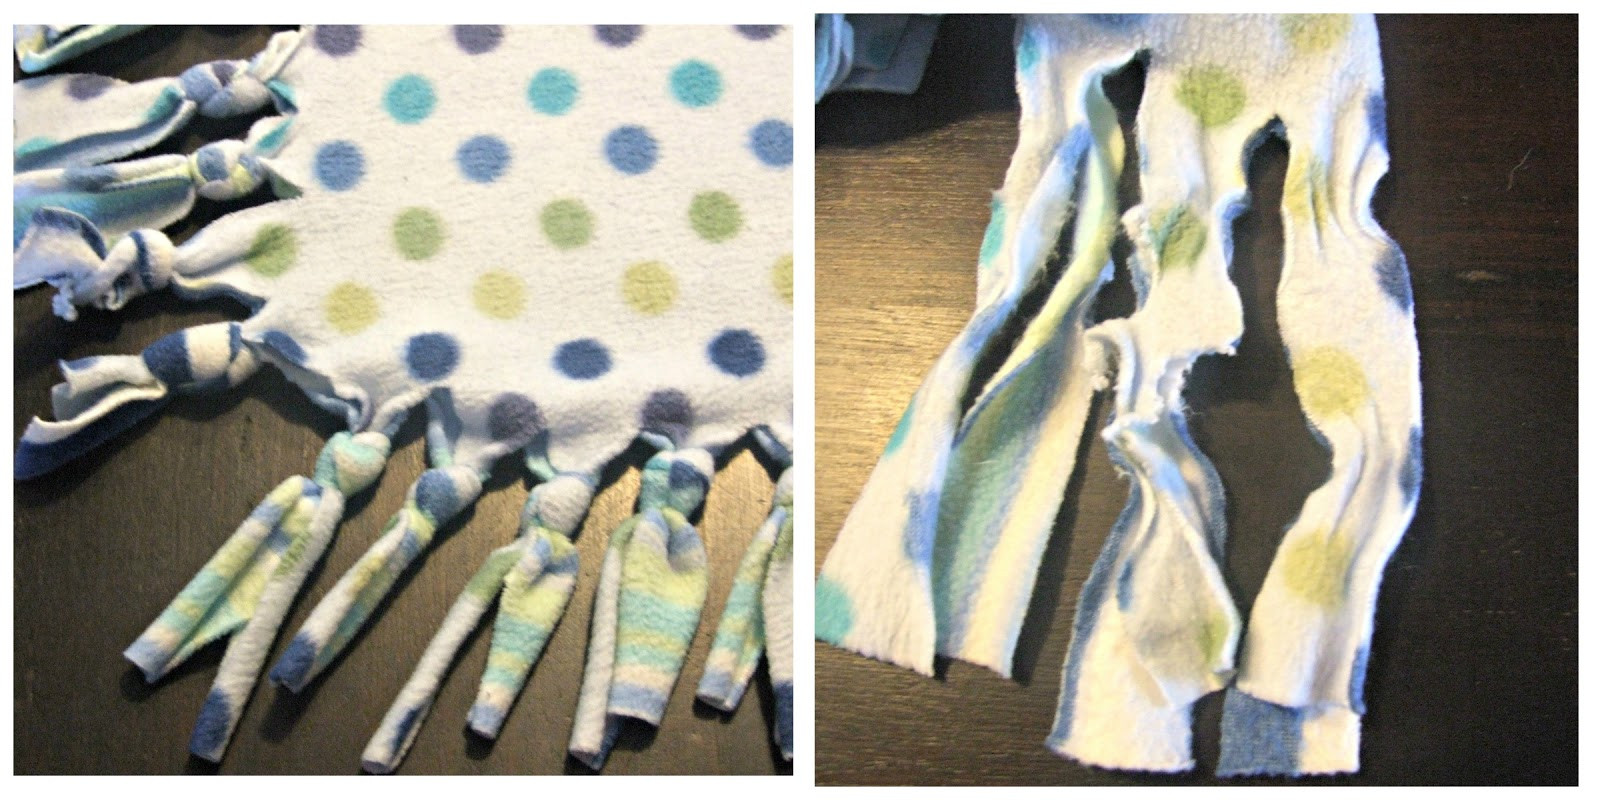 DIY No Sew Baby Blanket
 so gezellig DIY no sew baby blanket